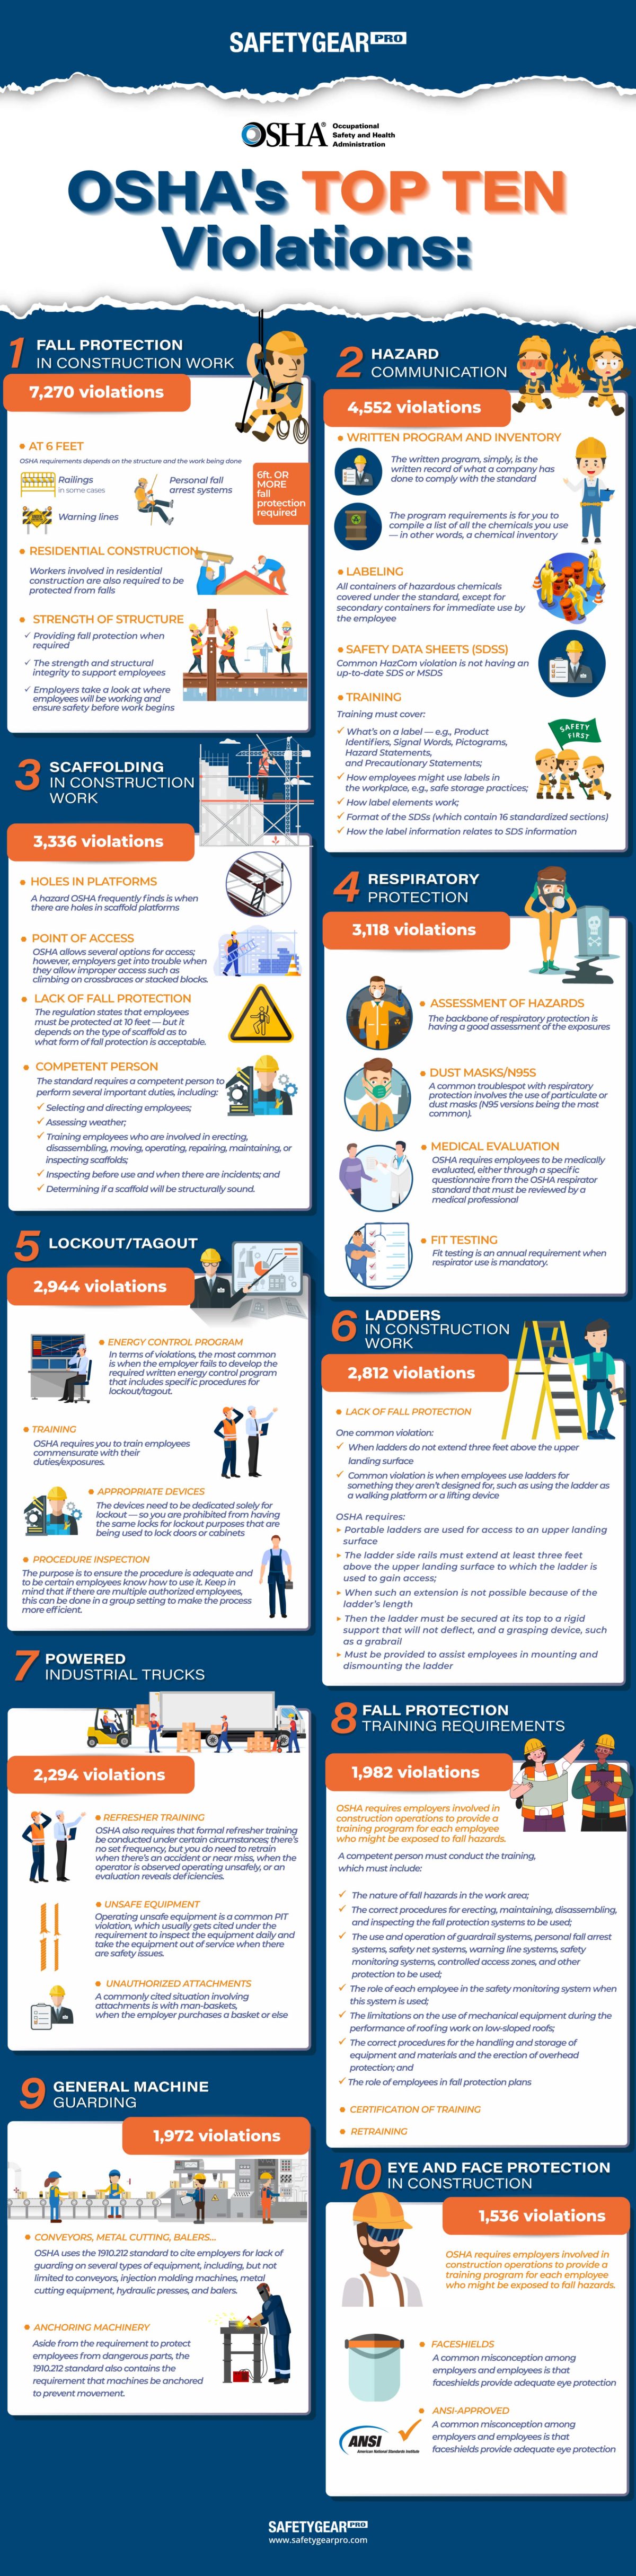 Top 10 Most Common OSHA Violations